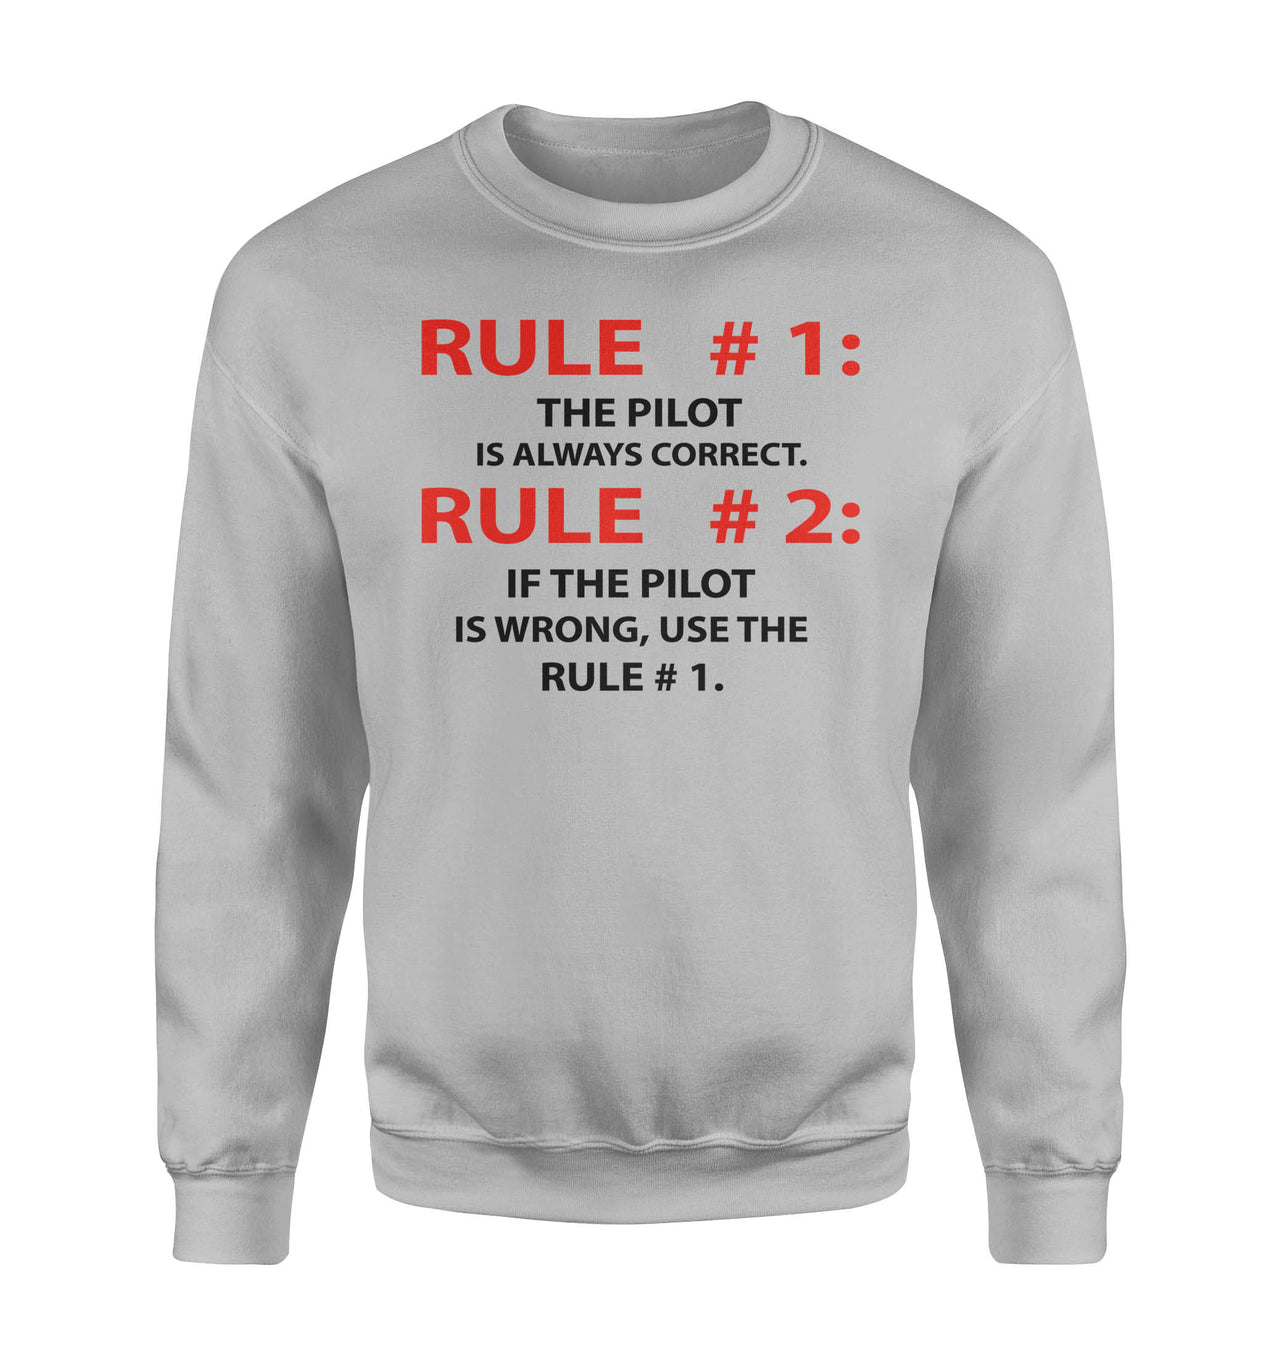 Rule 1 - Pilot is Always Correct Designed Sweatshirts